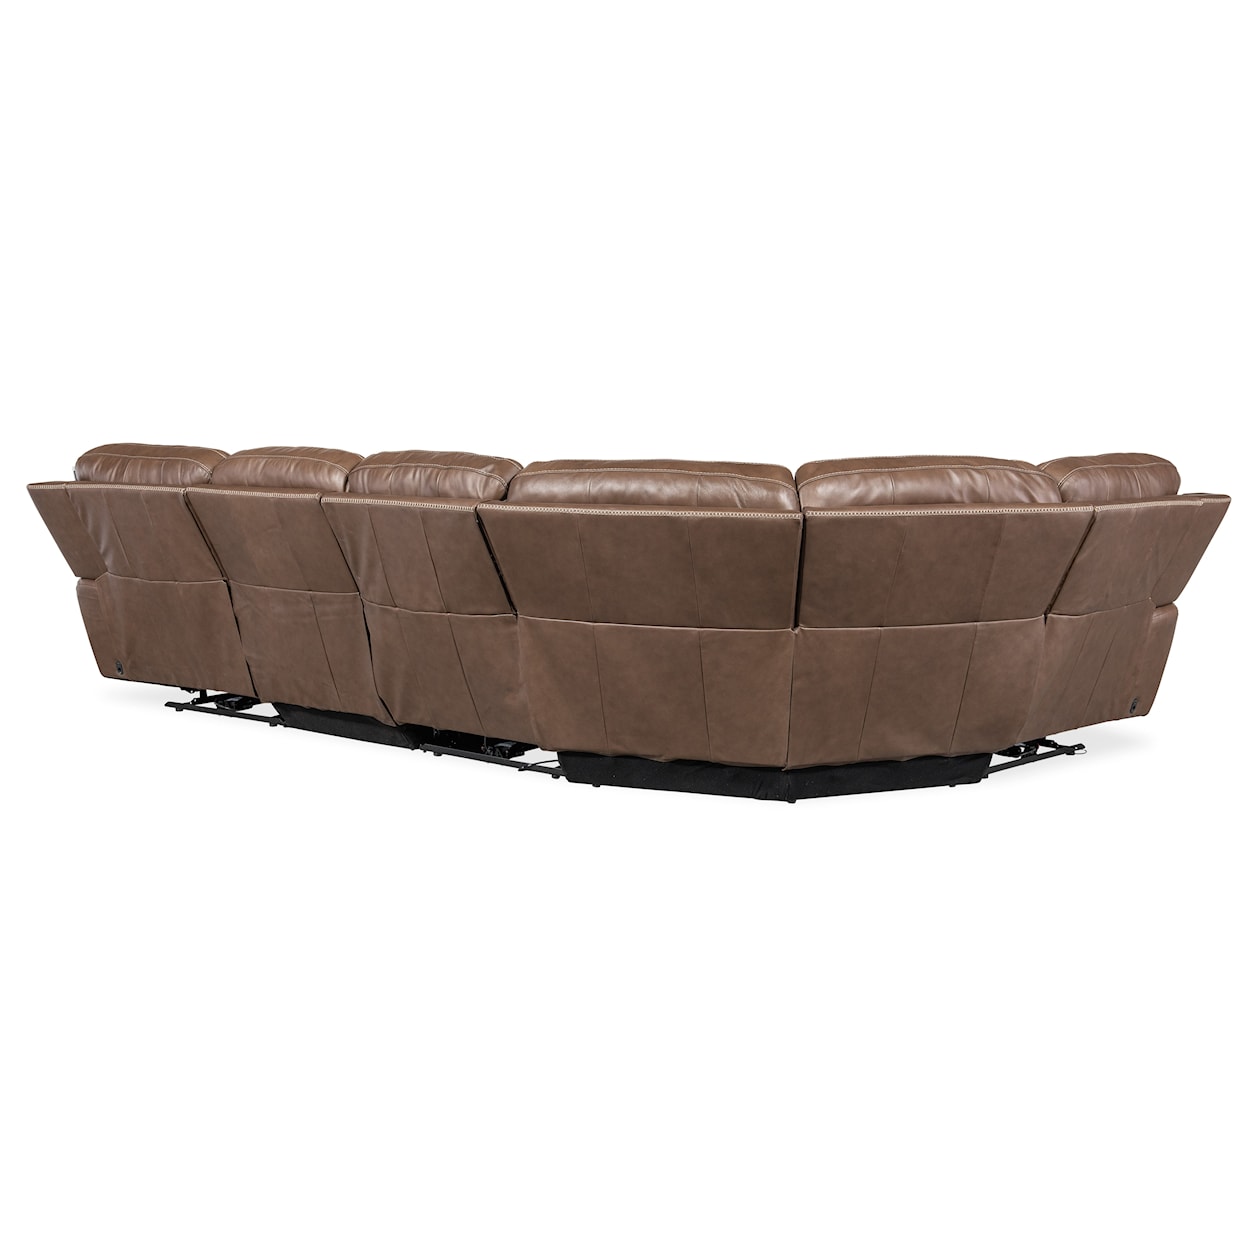 Hooker Furniture SS 5-Piece Sectional Sofa